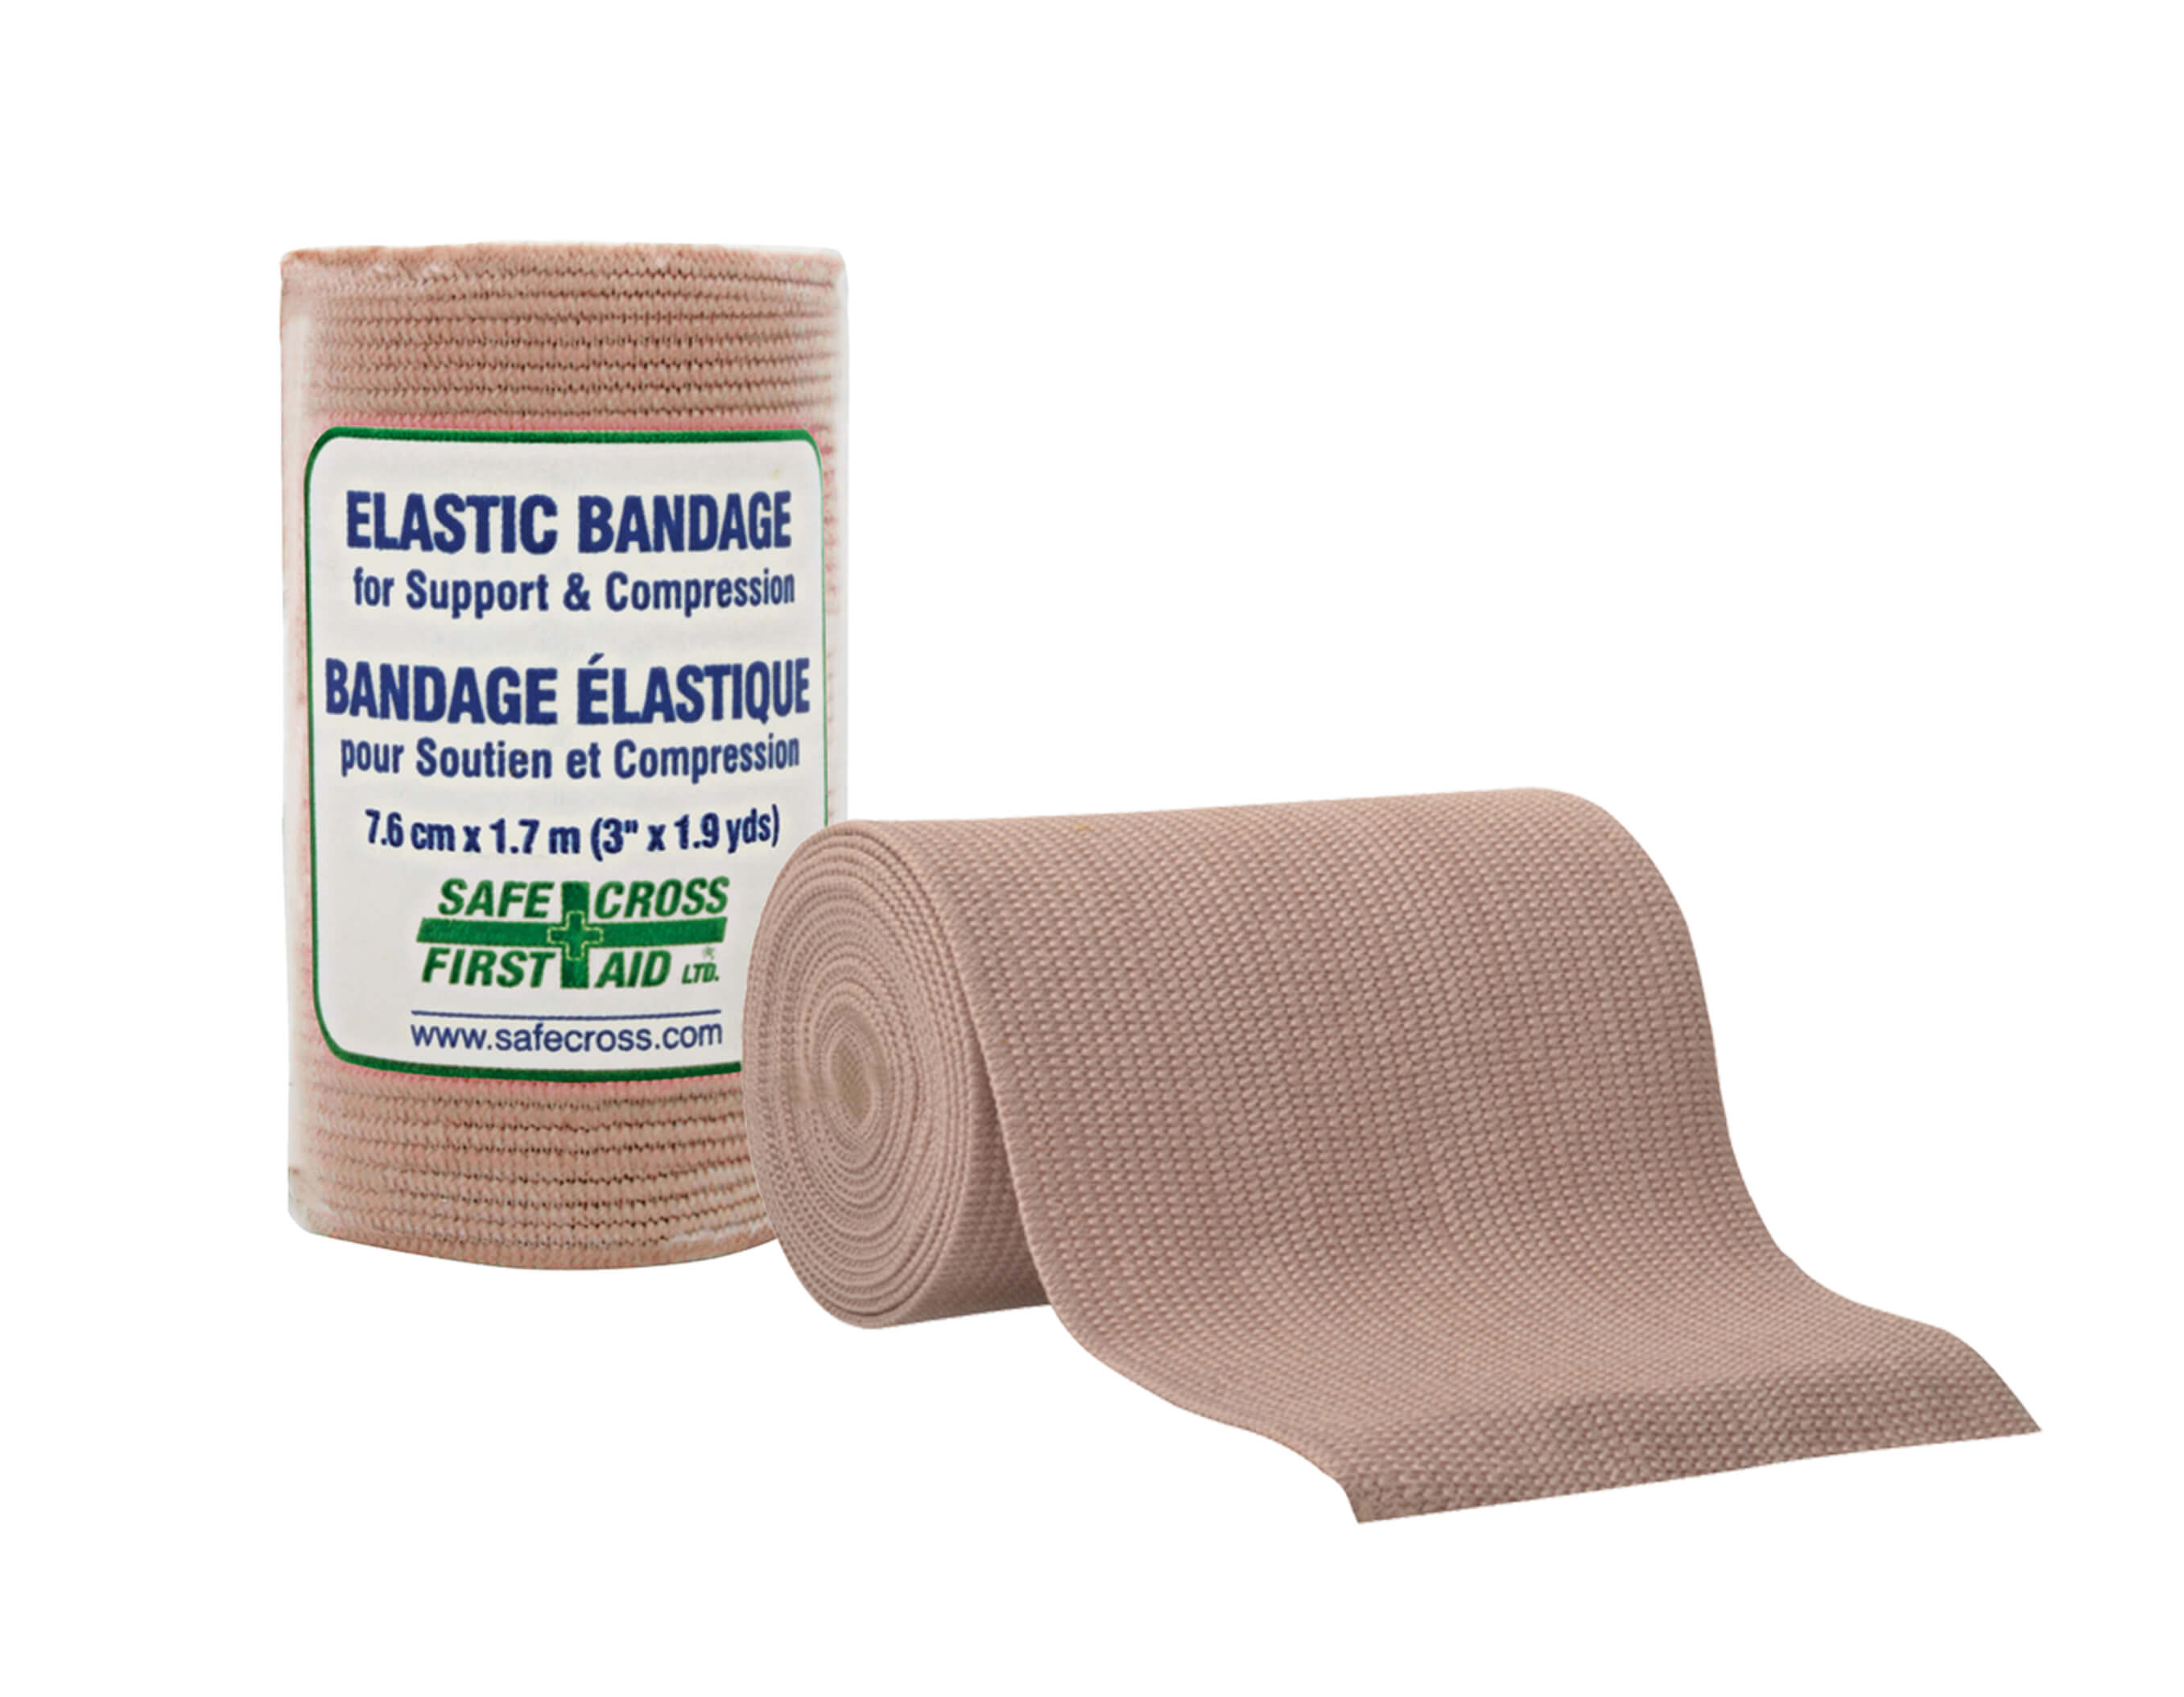 https://pim.wurth.ca/Product/898000350-elastic-bandage-support-compression-A-Wurth.jpg